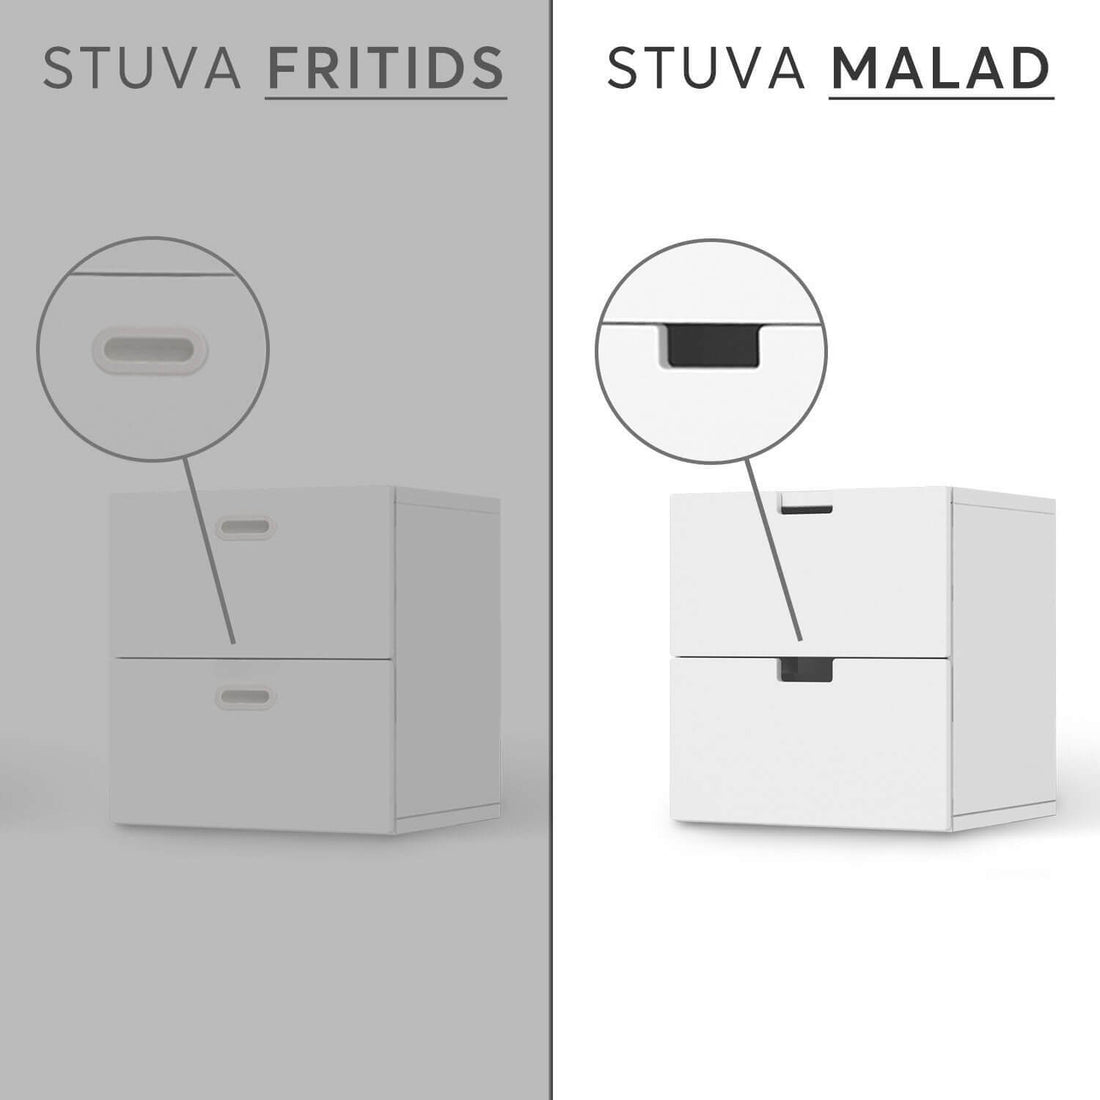 Vergleich IKEA Stuva Malad / Fritids - Schwarz